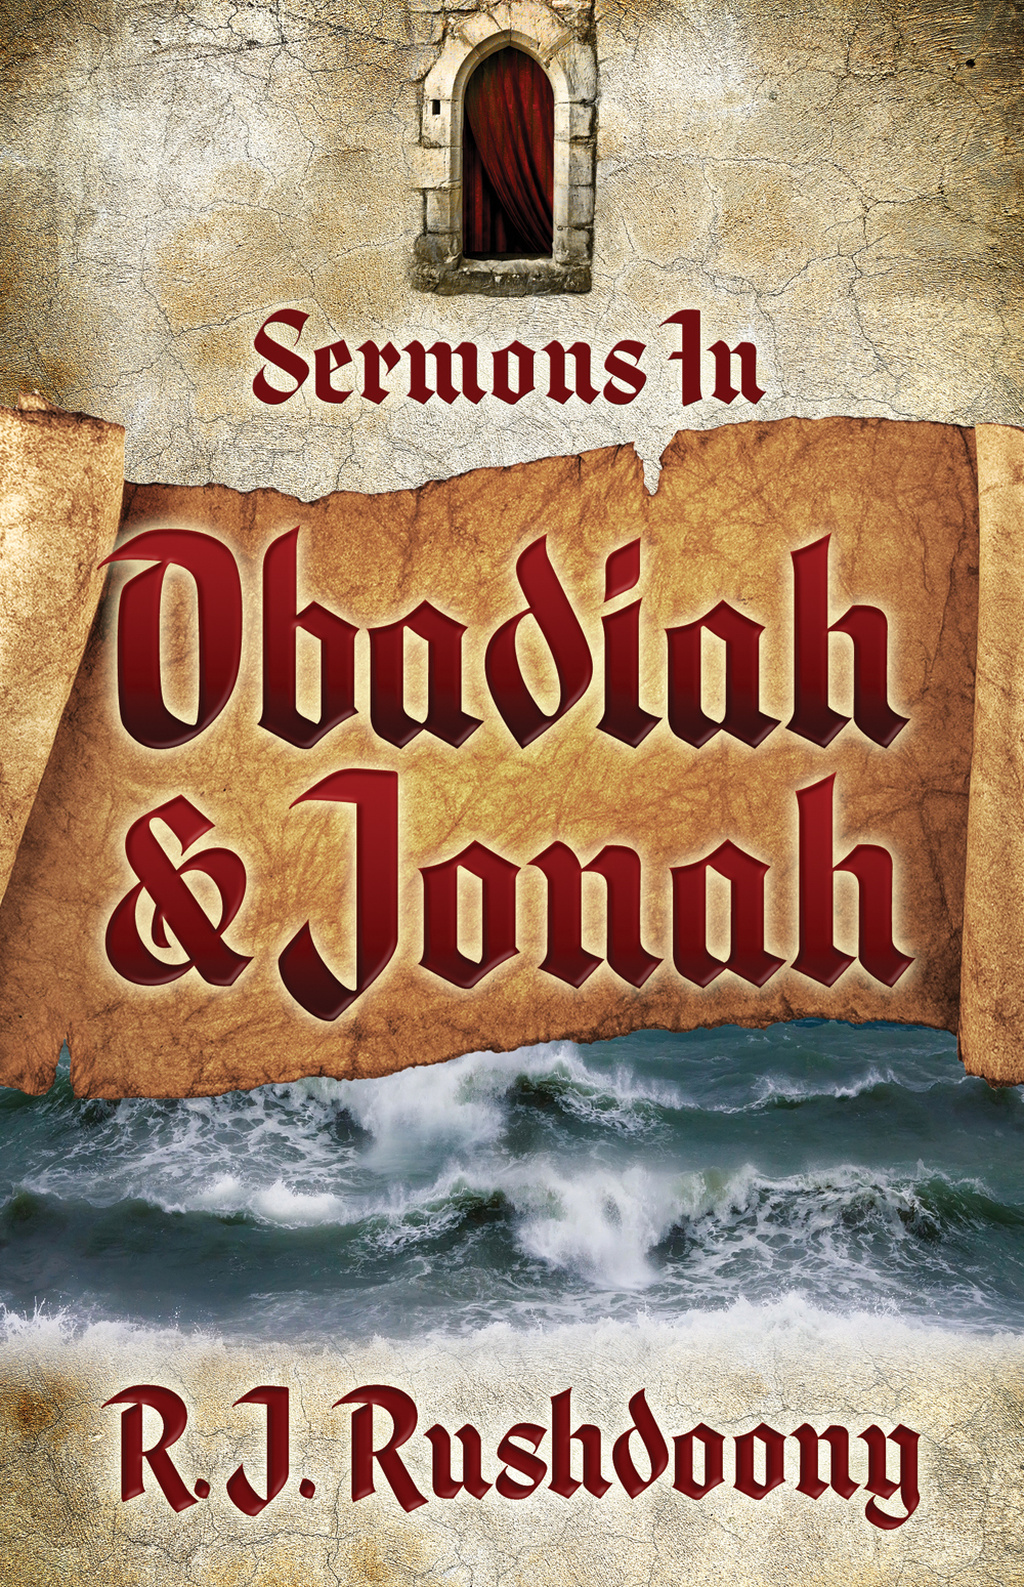 Obadiah Jonah Kindle Cover1000x1550 1